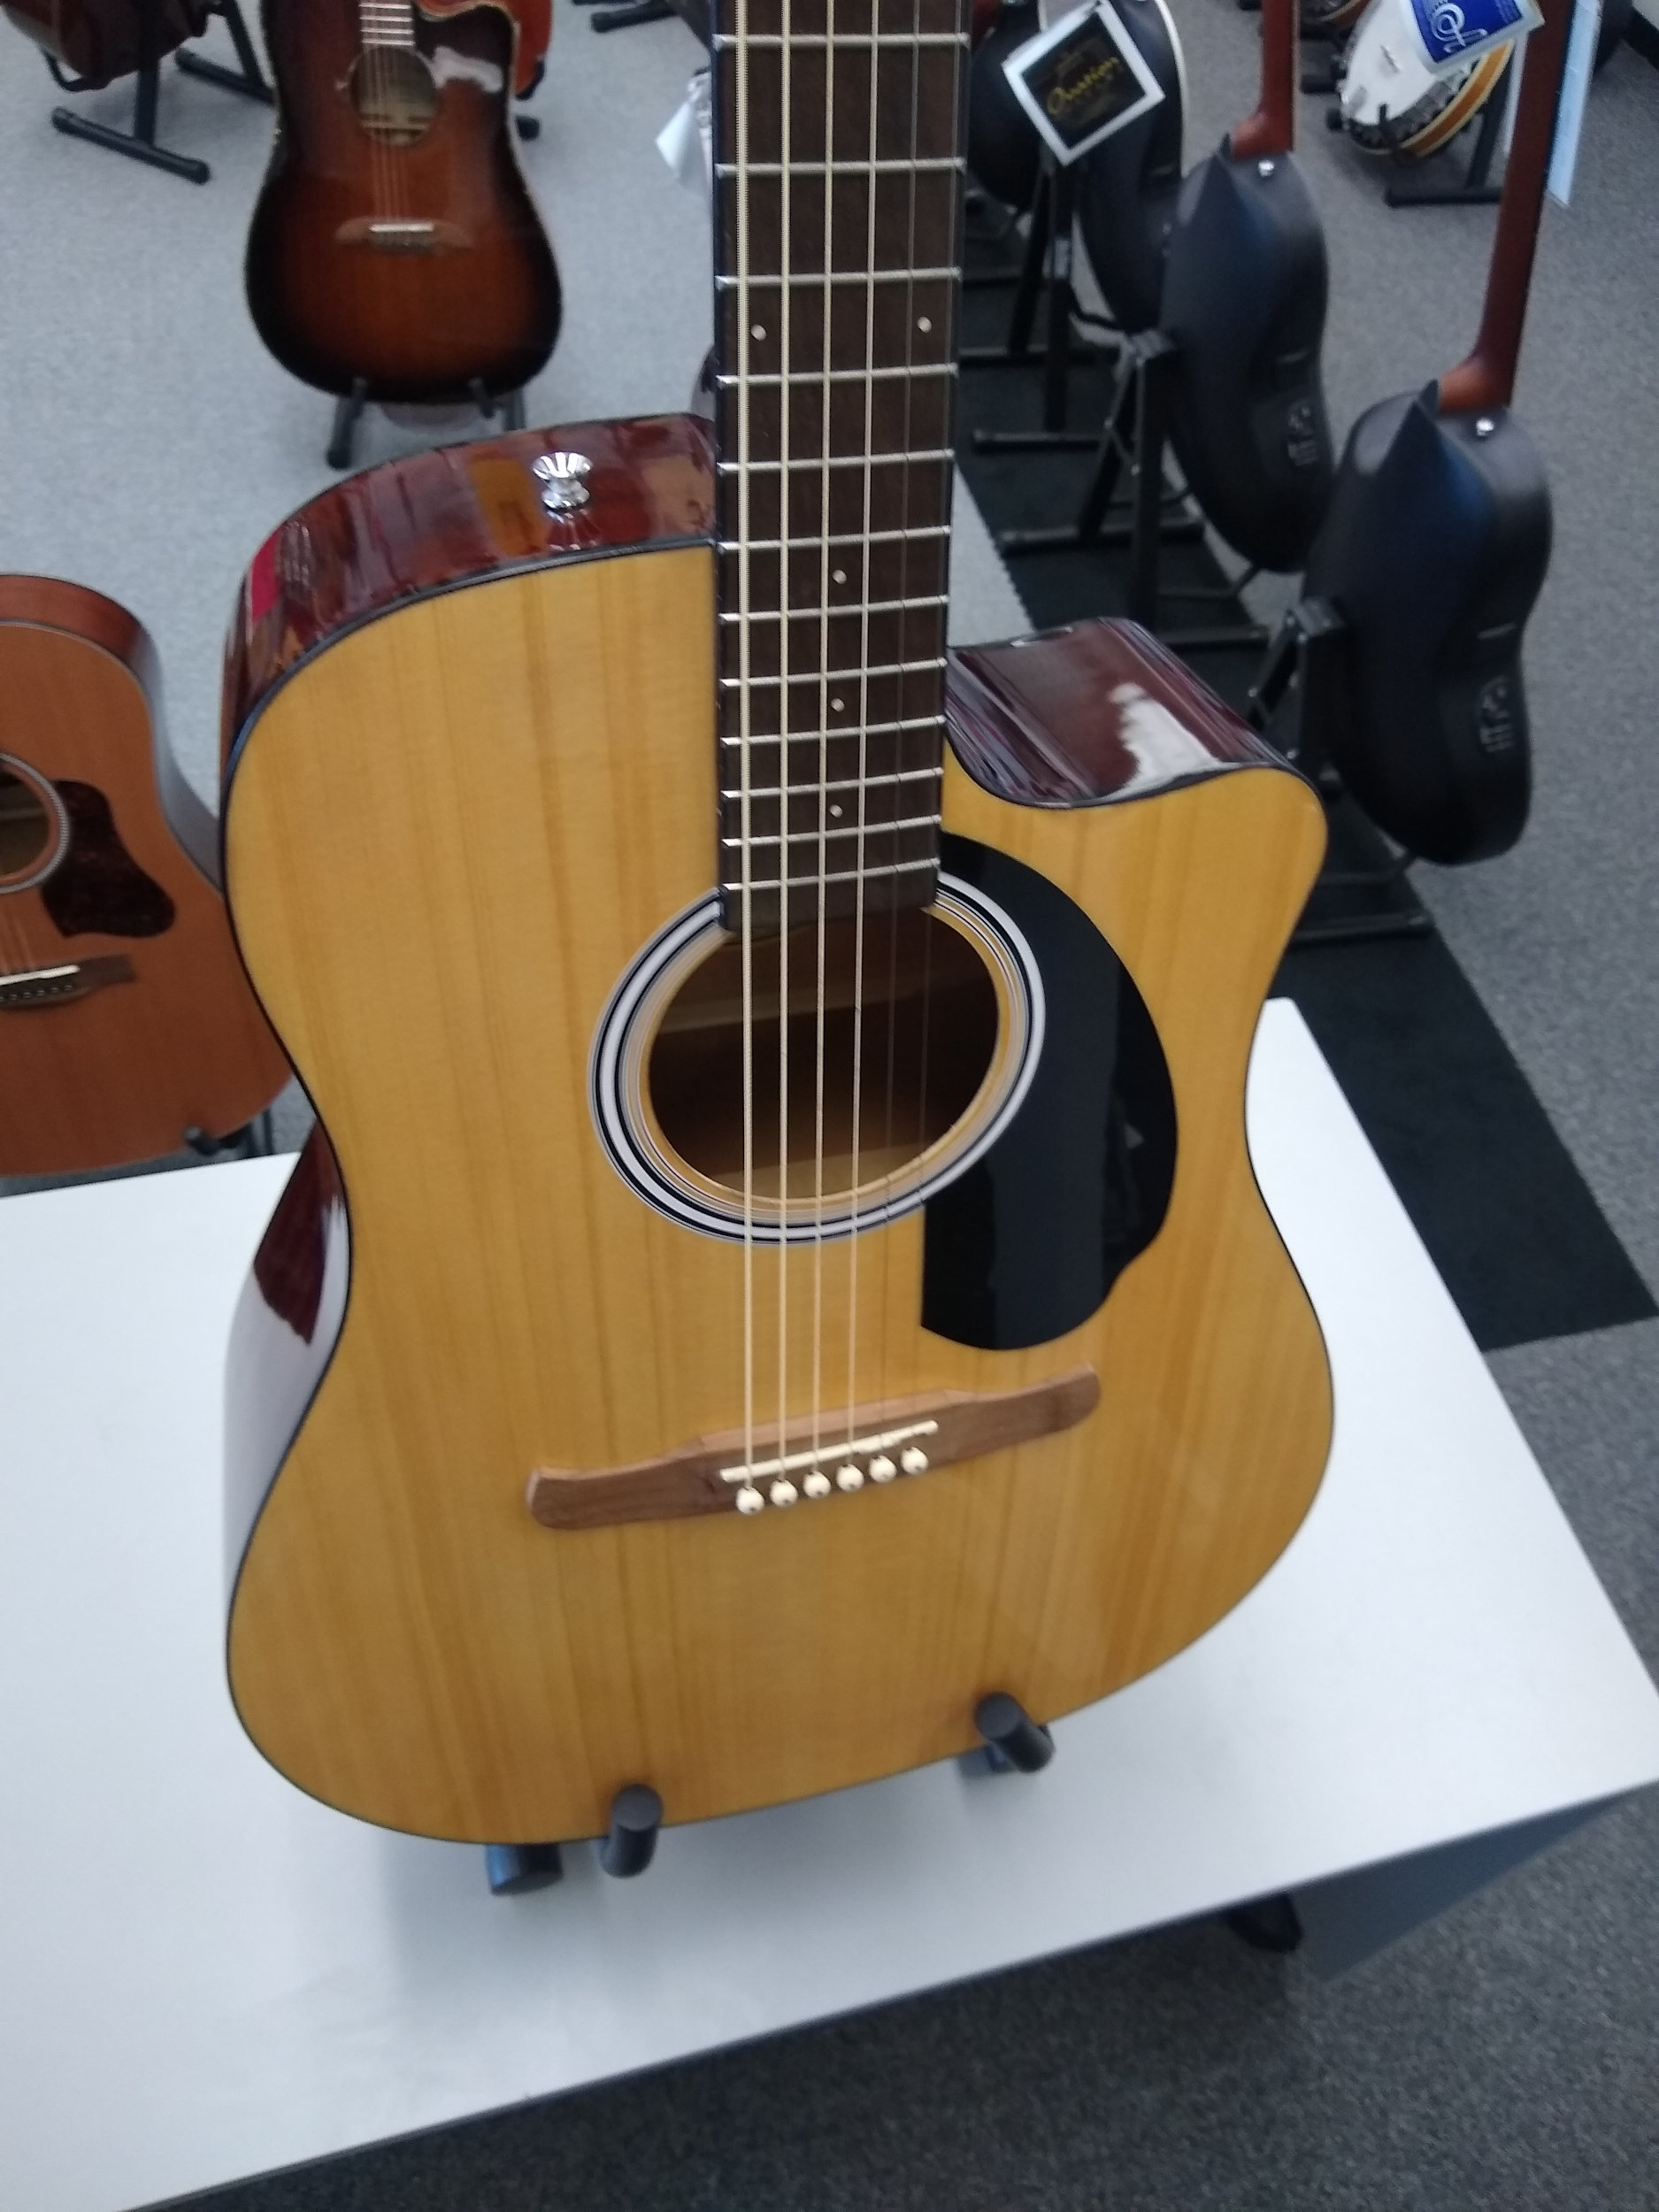 Fender FA125 Acoustic Guitar